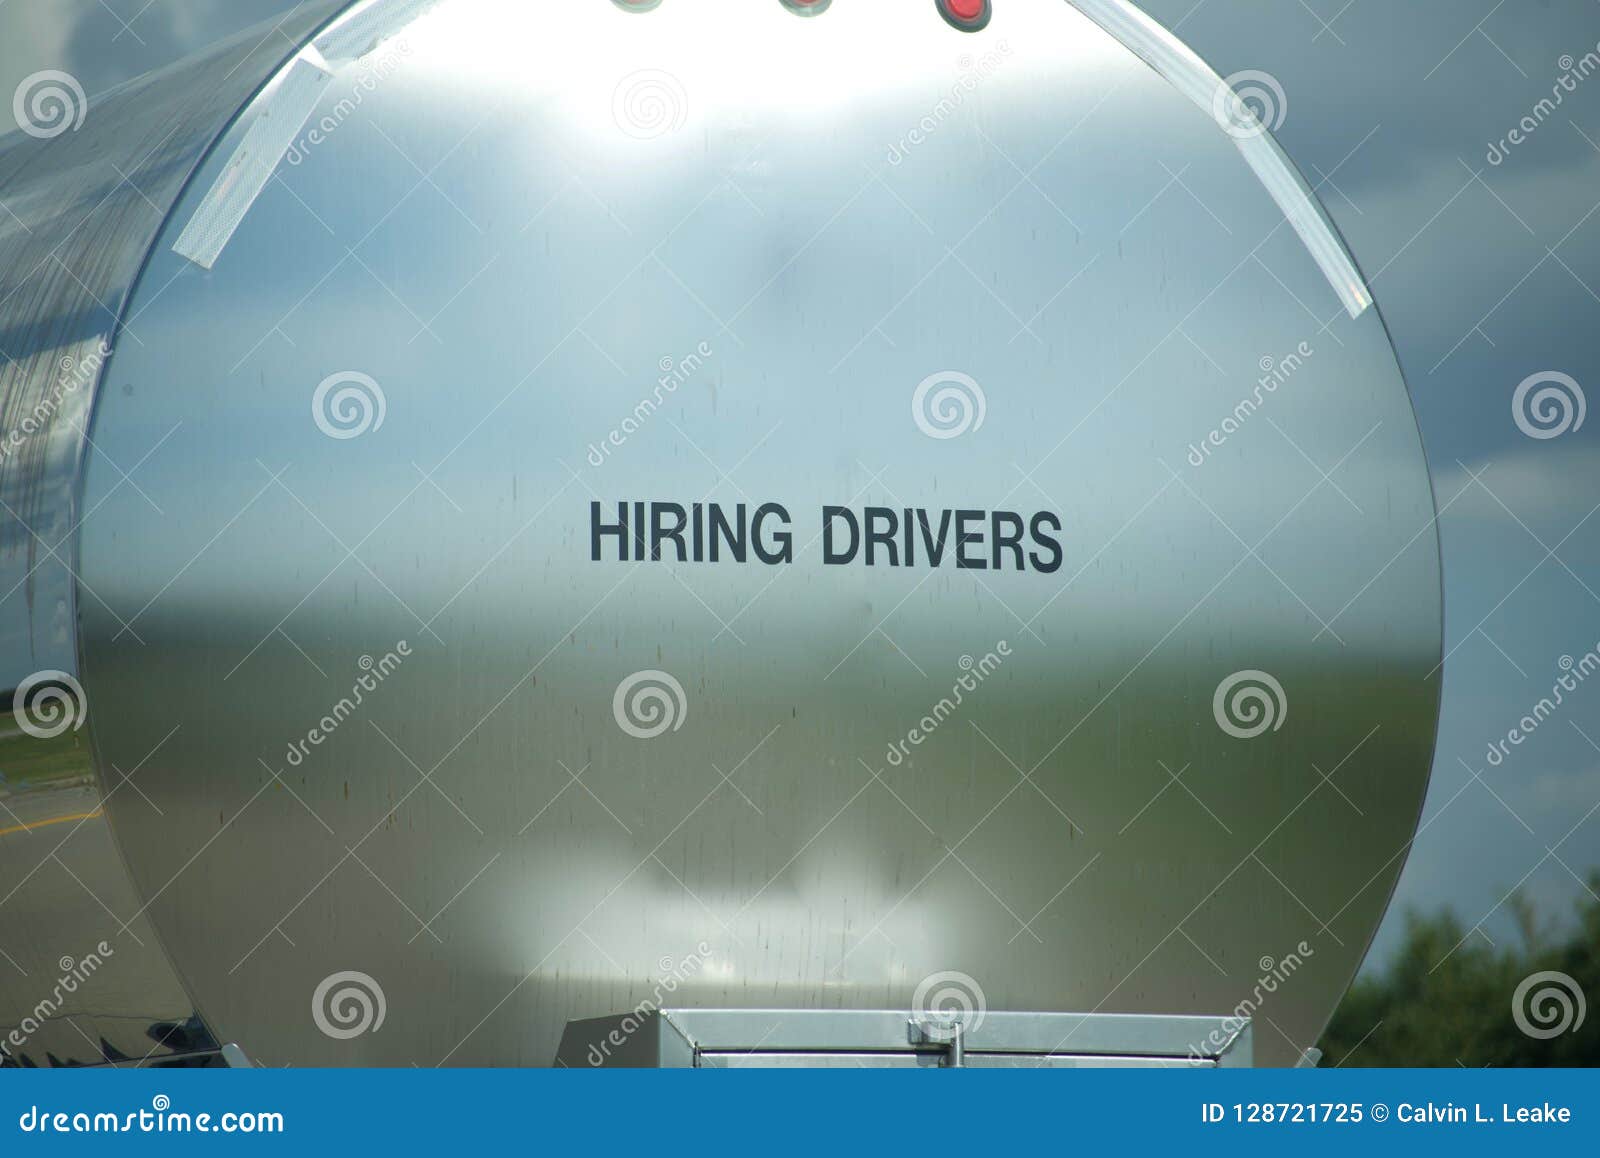 trucking company hiring drivers